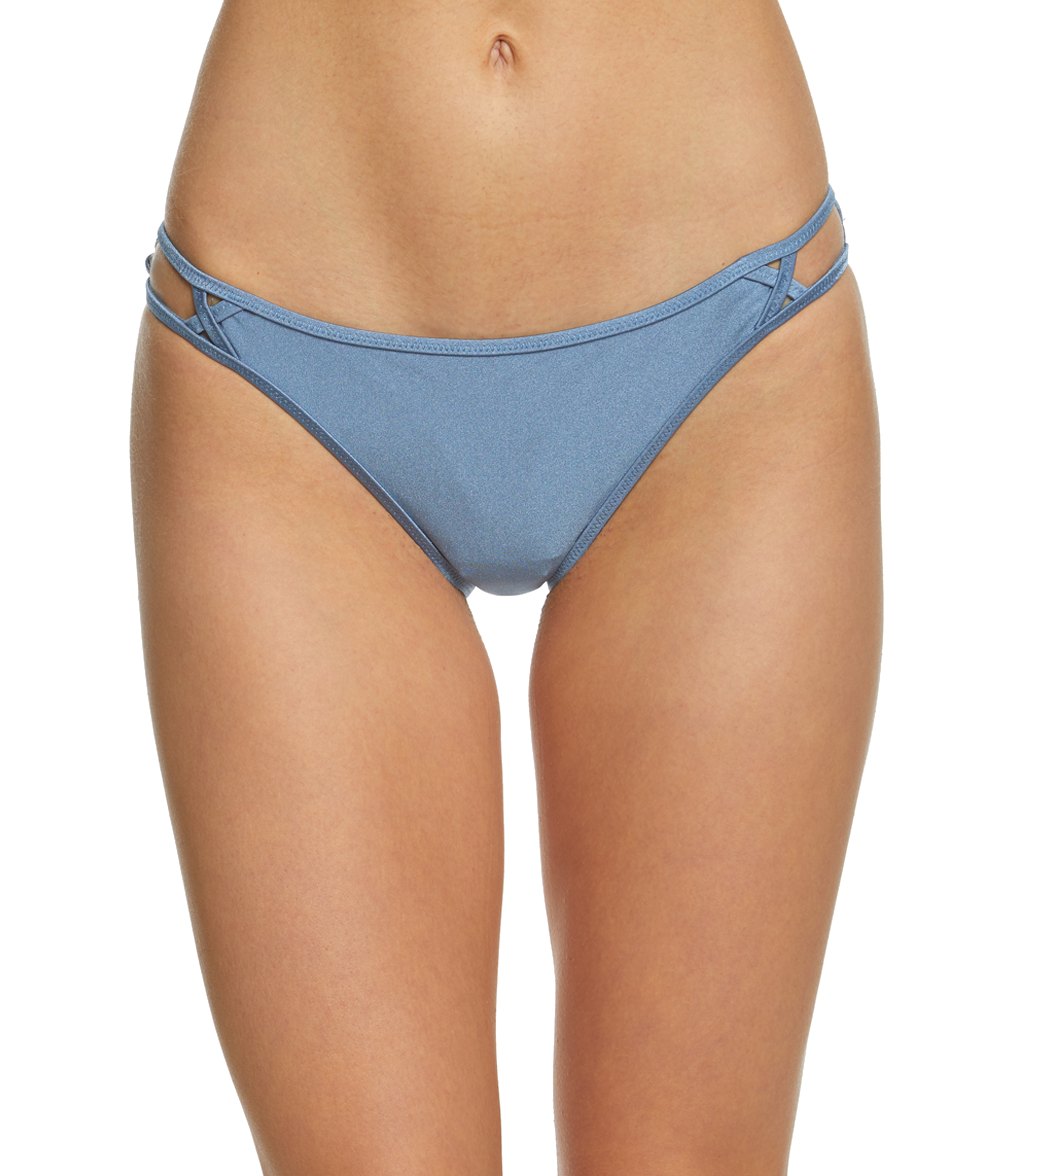 Tigerlily Vasudhara Tiger Bikini Bottom - French Blue 2 Elastane/Polyamide - Swimoutlet.com